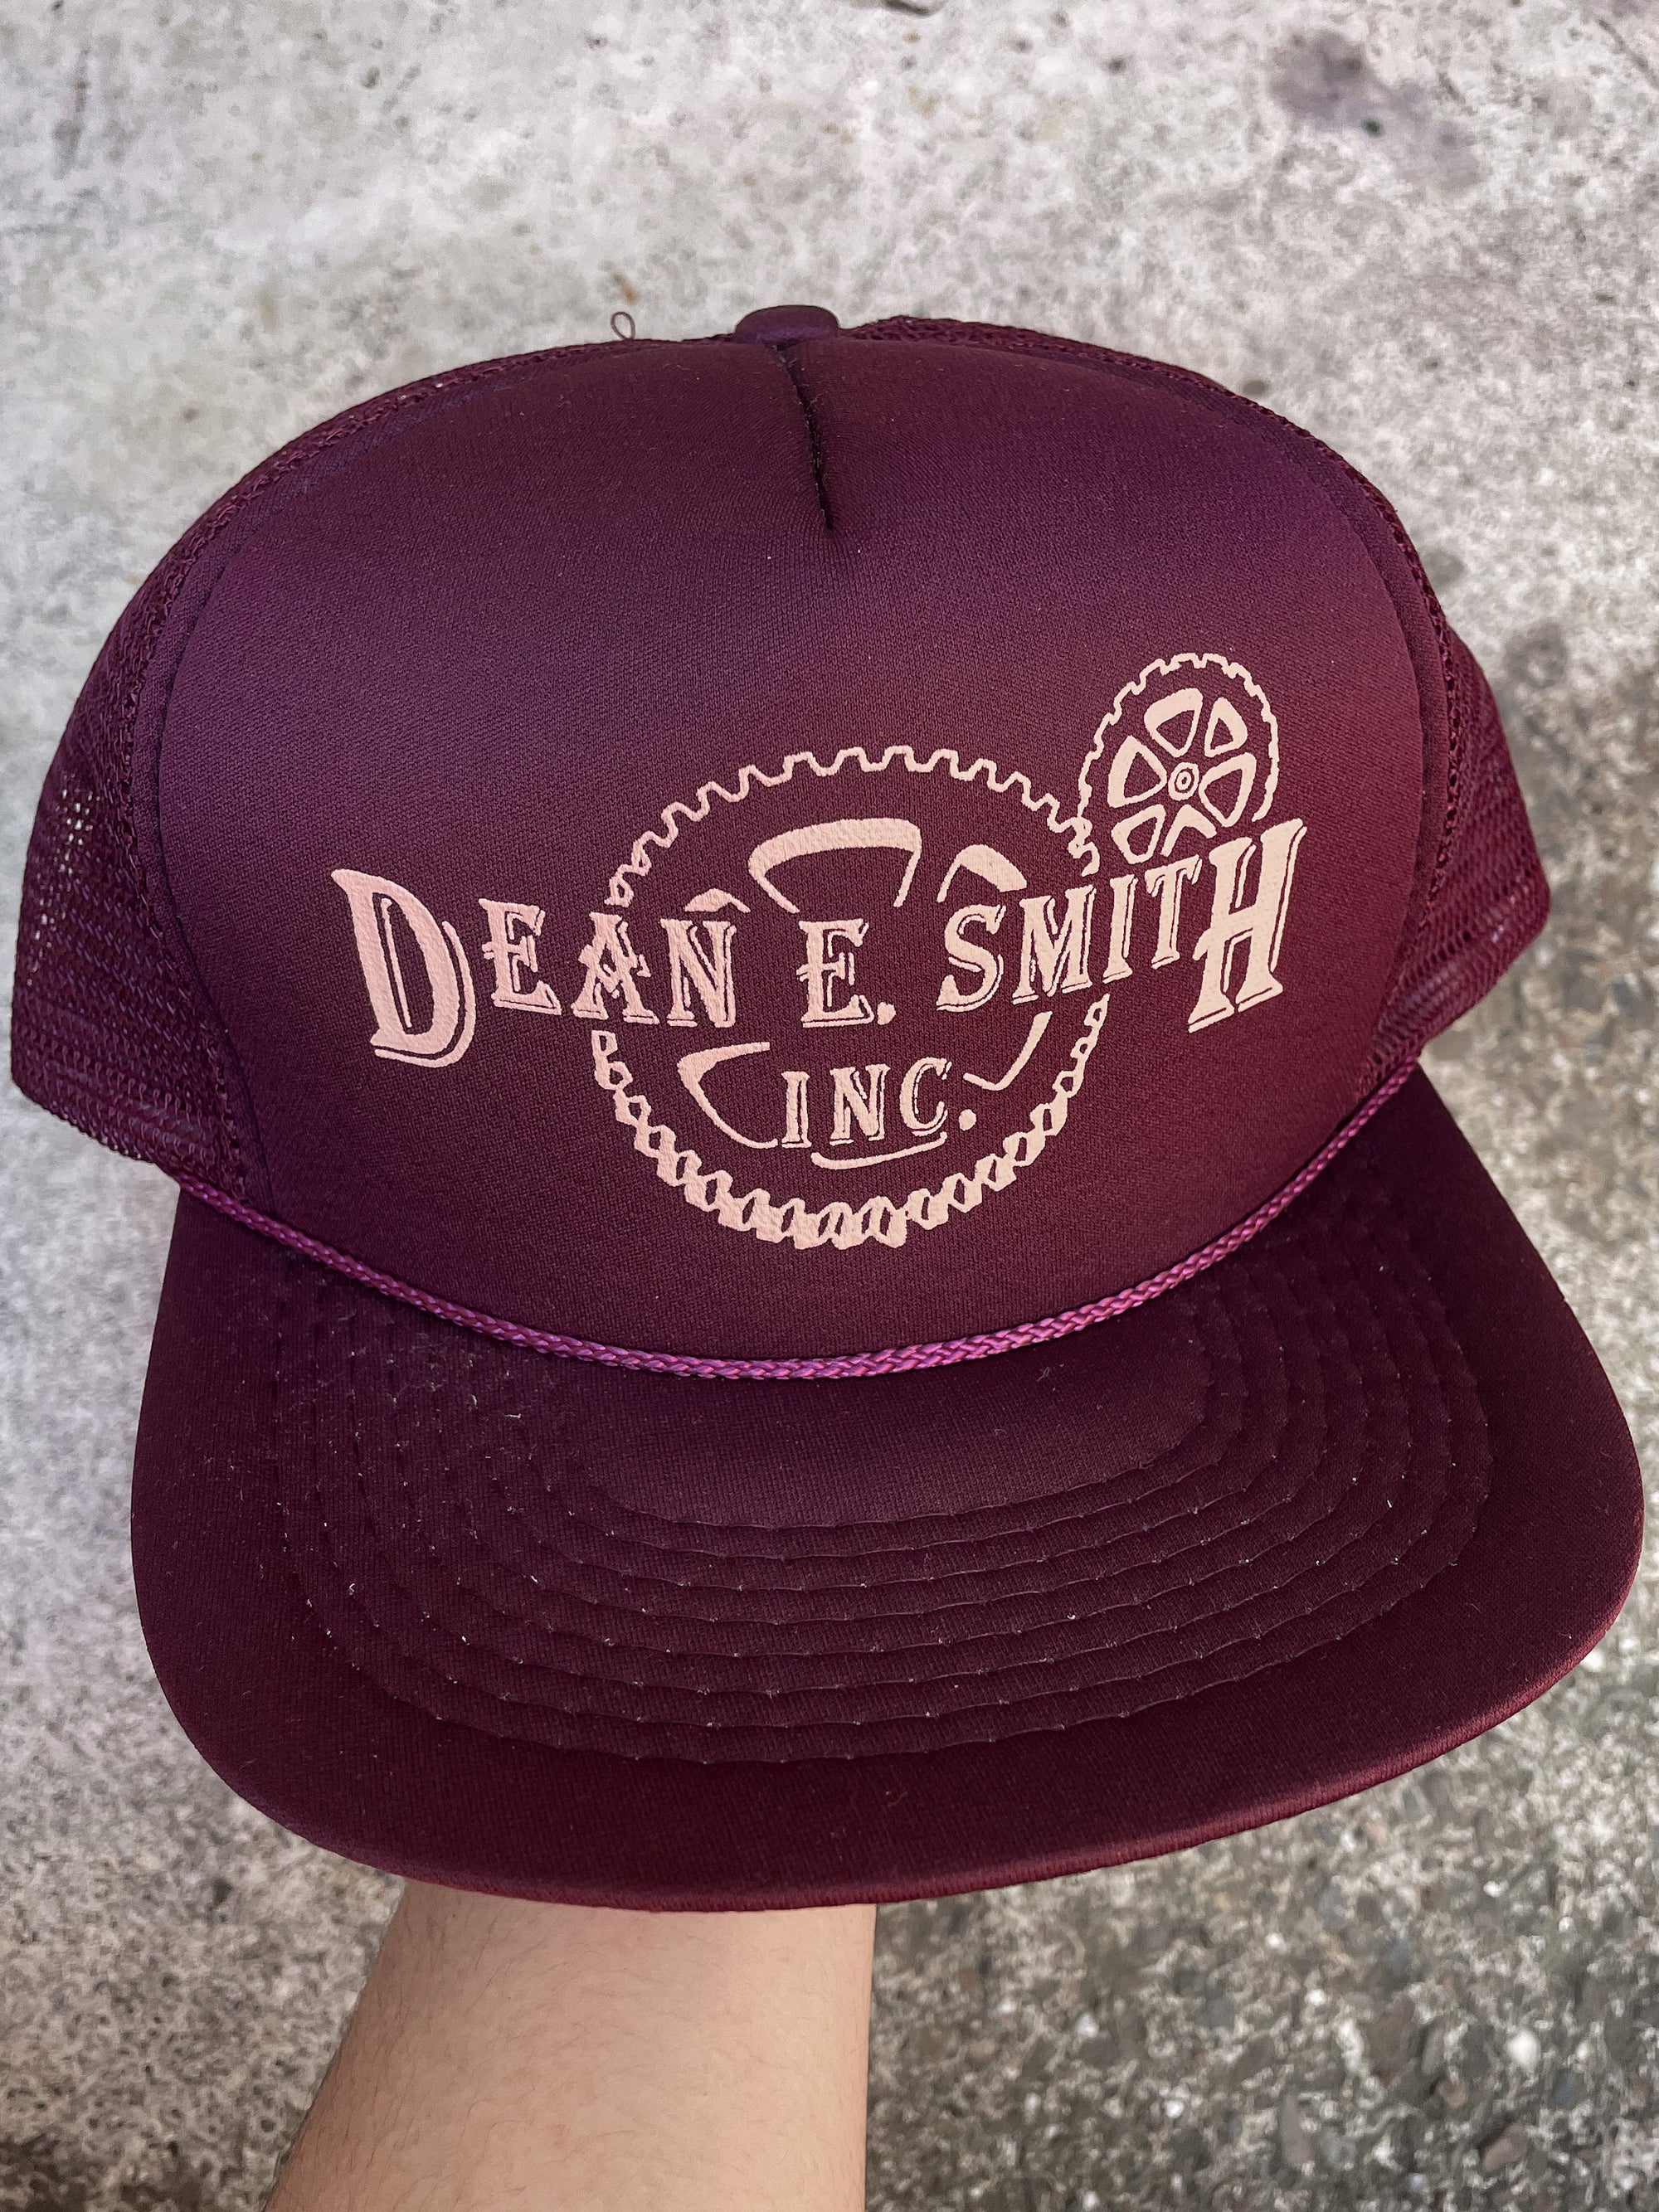 1990s “Dean E. Smith” Trucker Hat